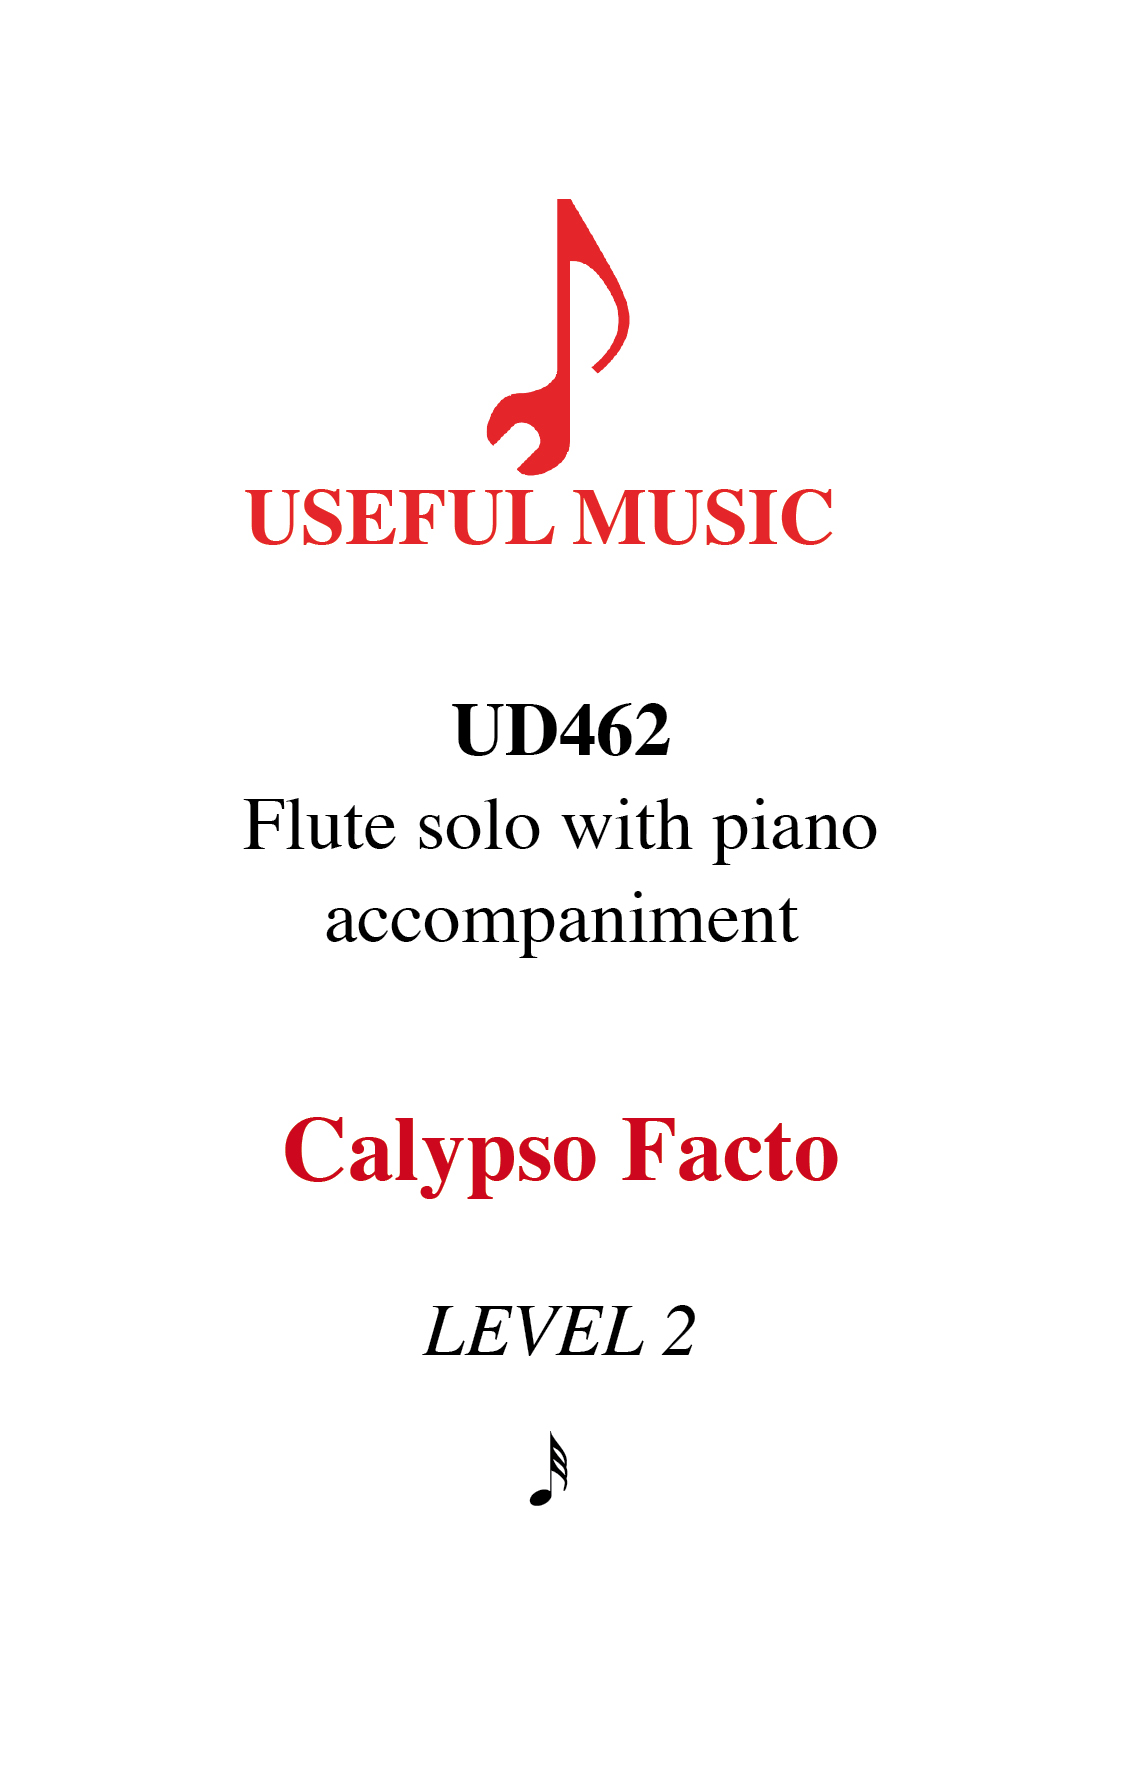 Calypso Facto - flute with piano accompaniment